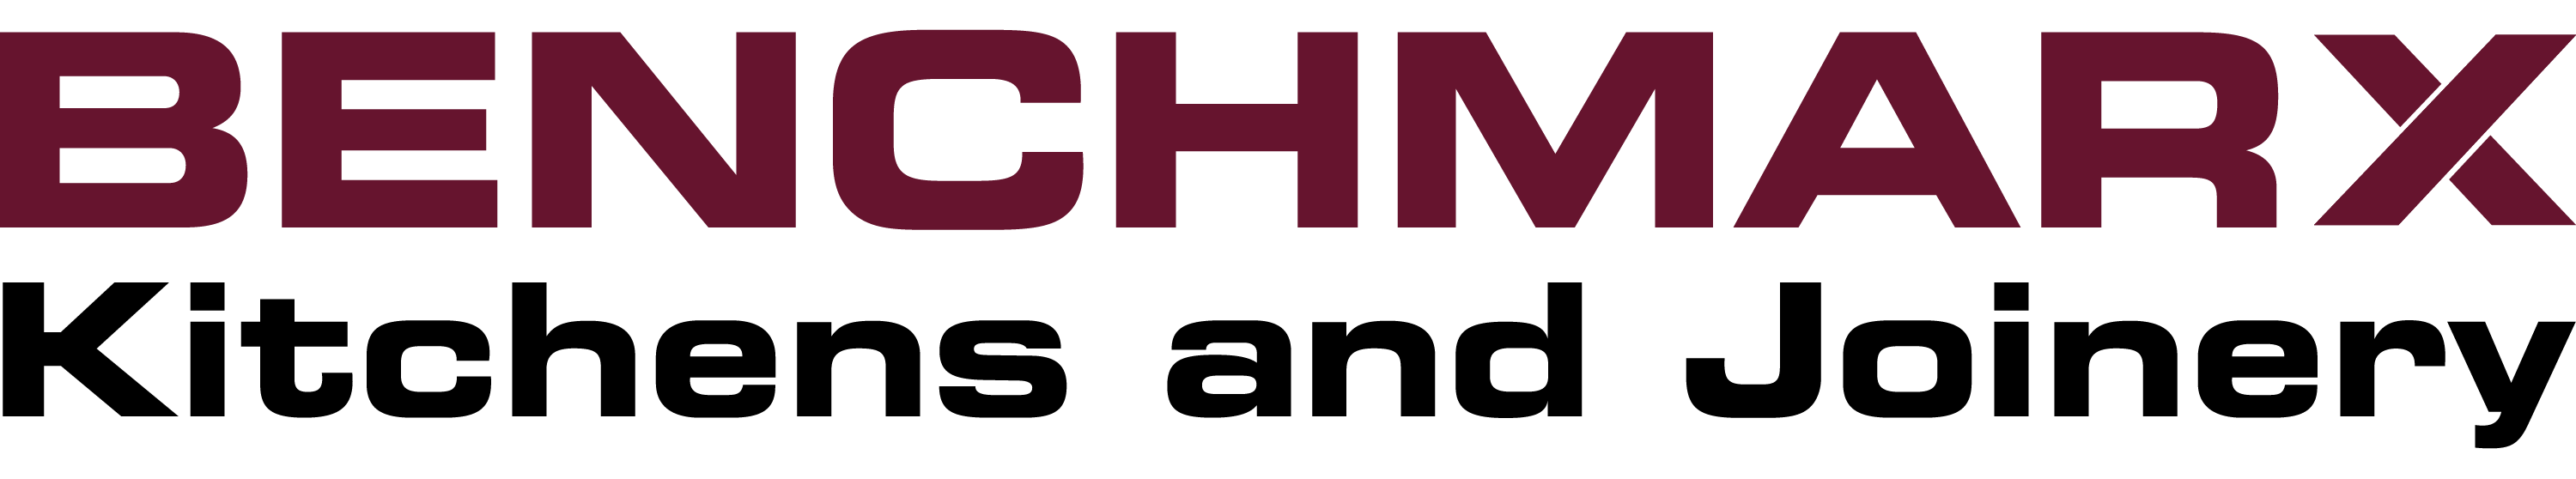 Benchmarx logo